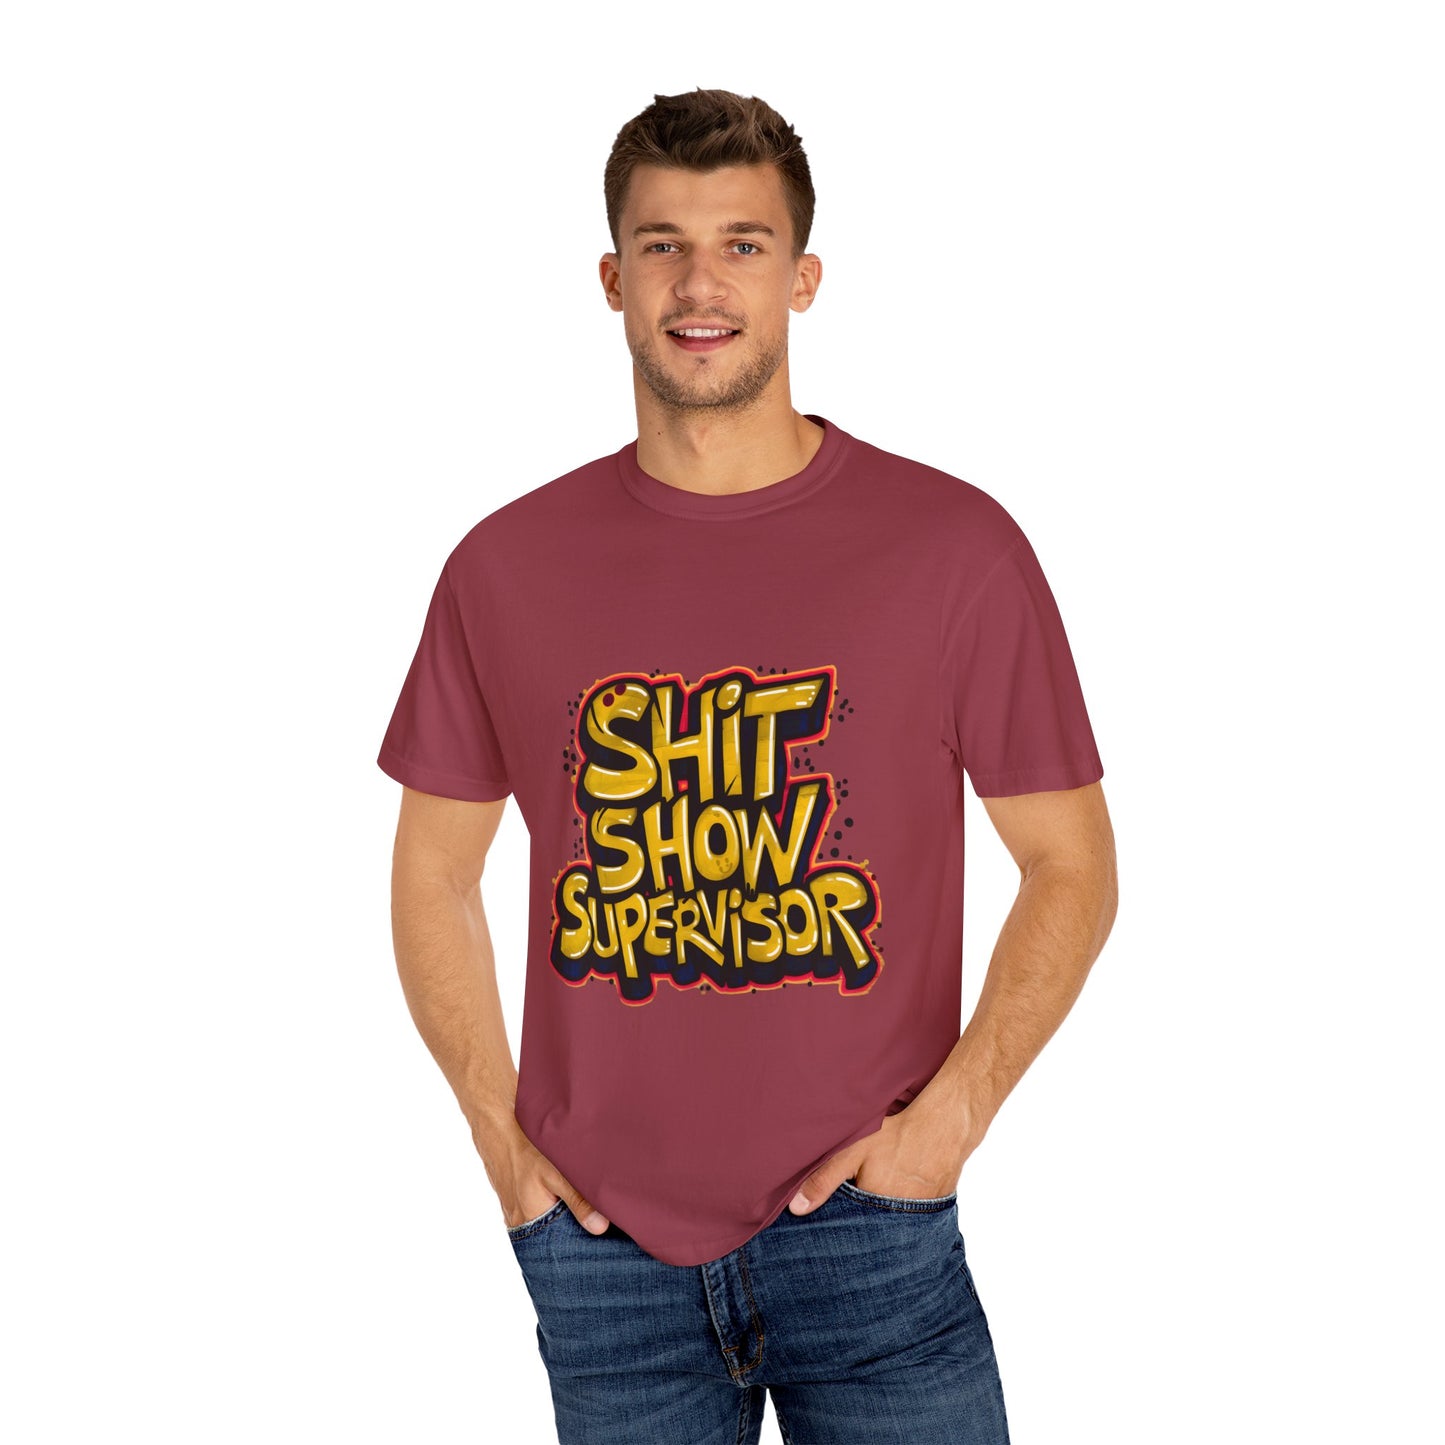 Shit Show Supervisor Urban Sarcastic Graphic Unisex Garment Dyed T-shirt Cotton Funny Humorous Graphic Soft Premium Unisex Men Women Chili T-shirt Birthday Gift-36